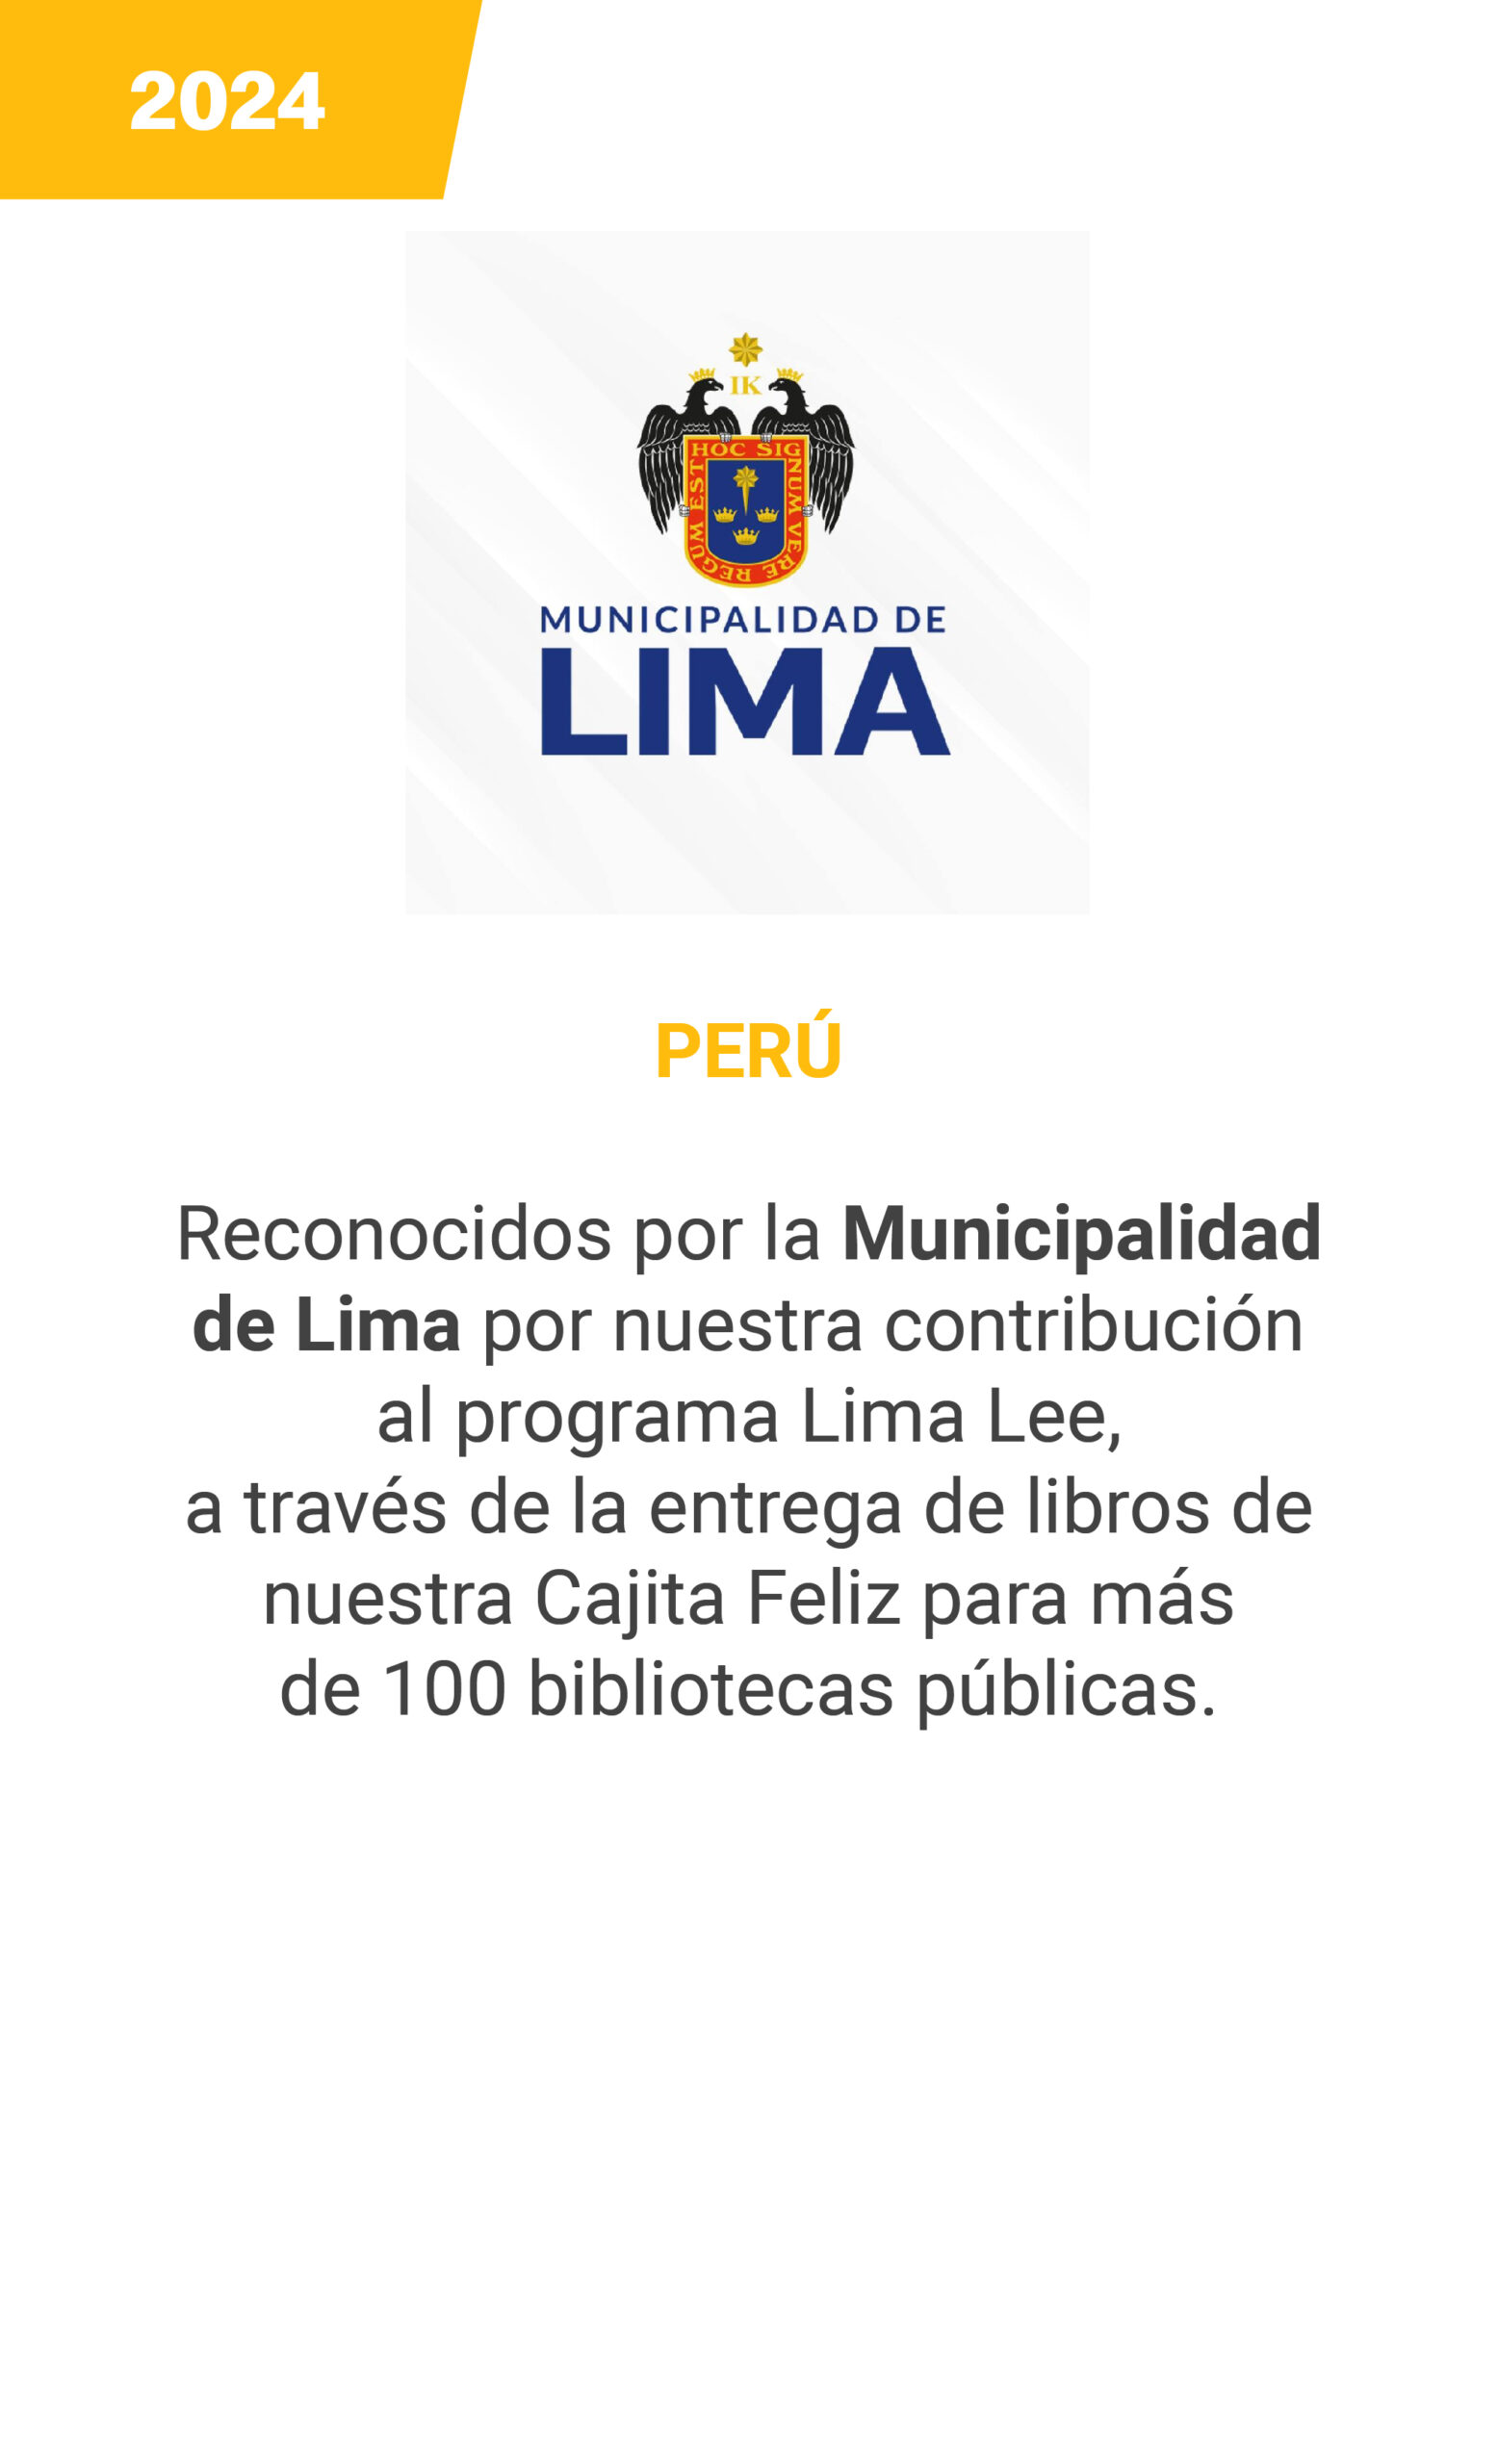 Municipalidad de Lima - 2024 - mobile